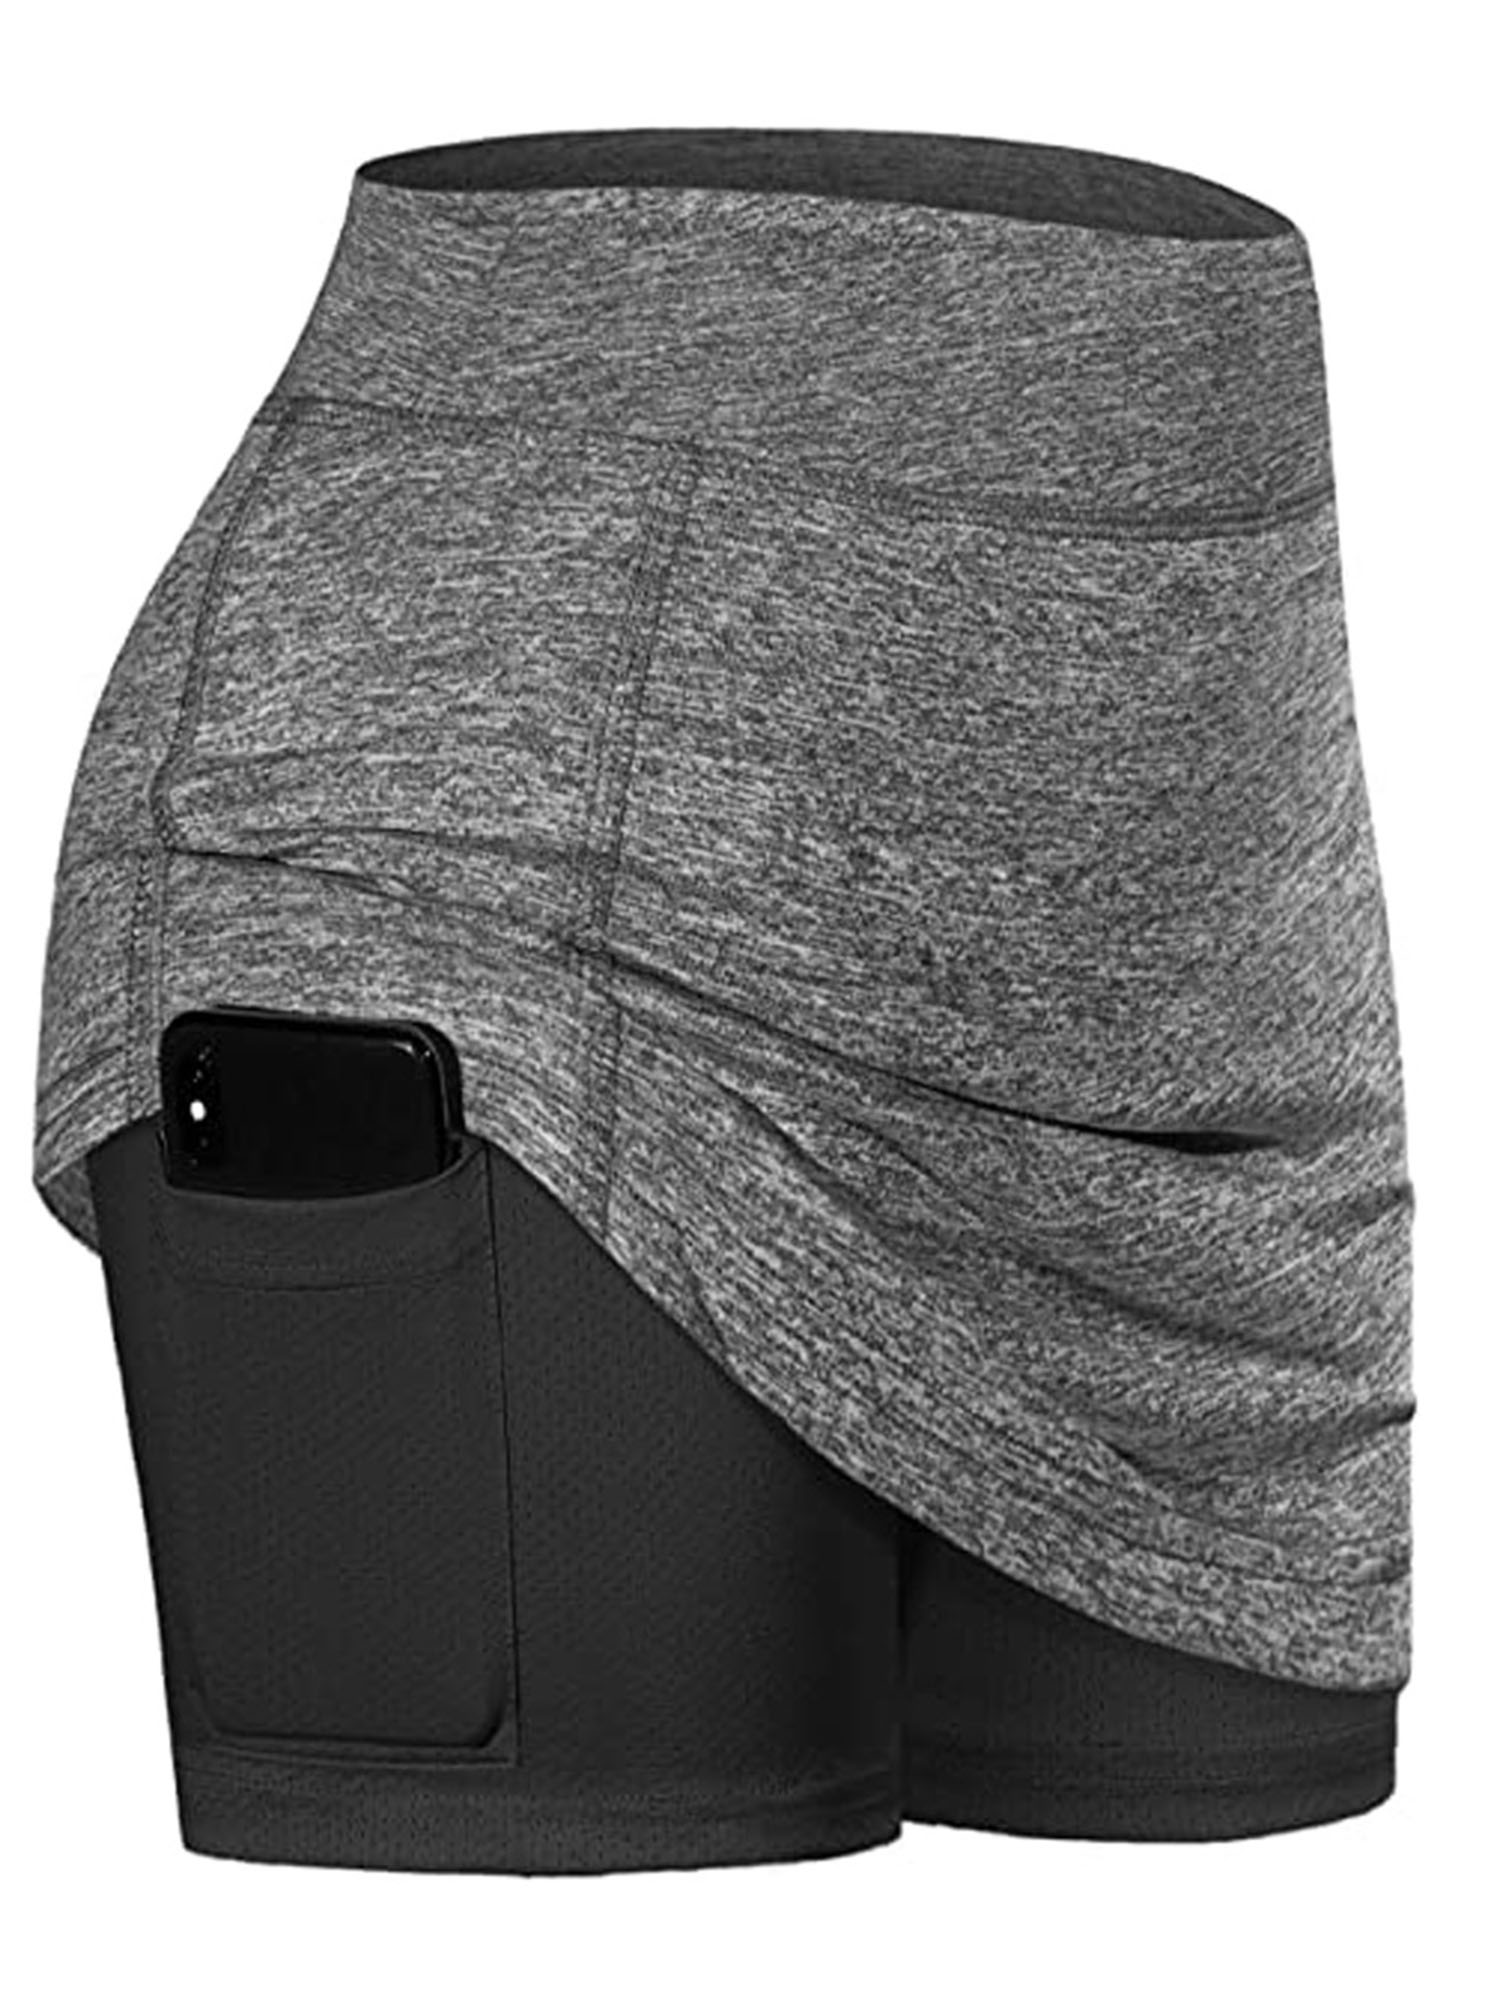 Yaavii Womens Sport Tennis Skirt Inner Shorts Elastic Waist Athletic Skort with Pocket Running Workout